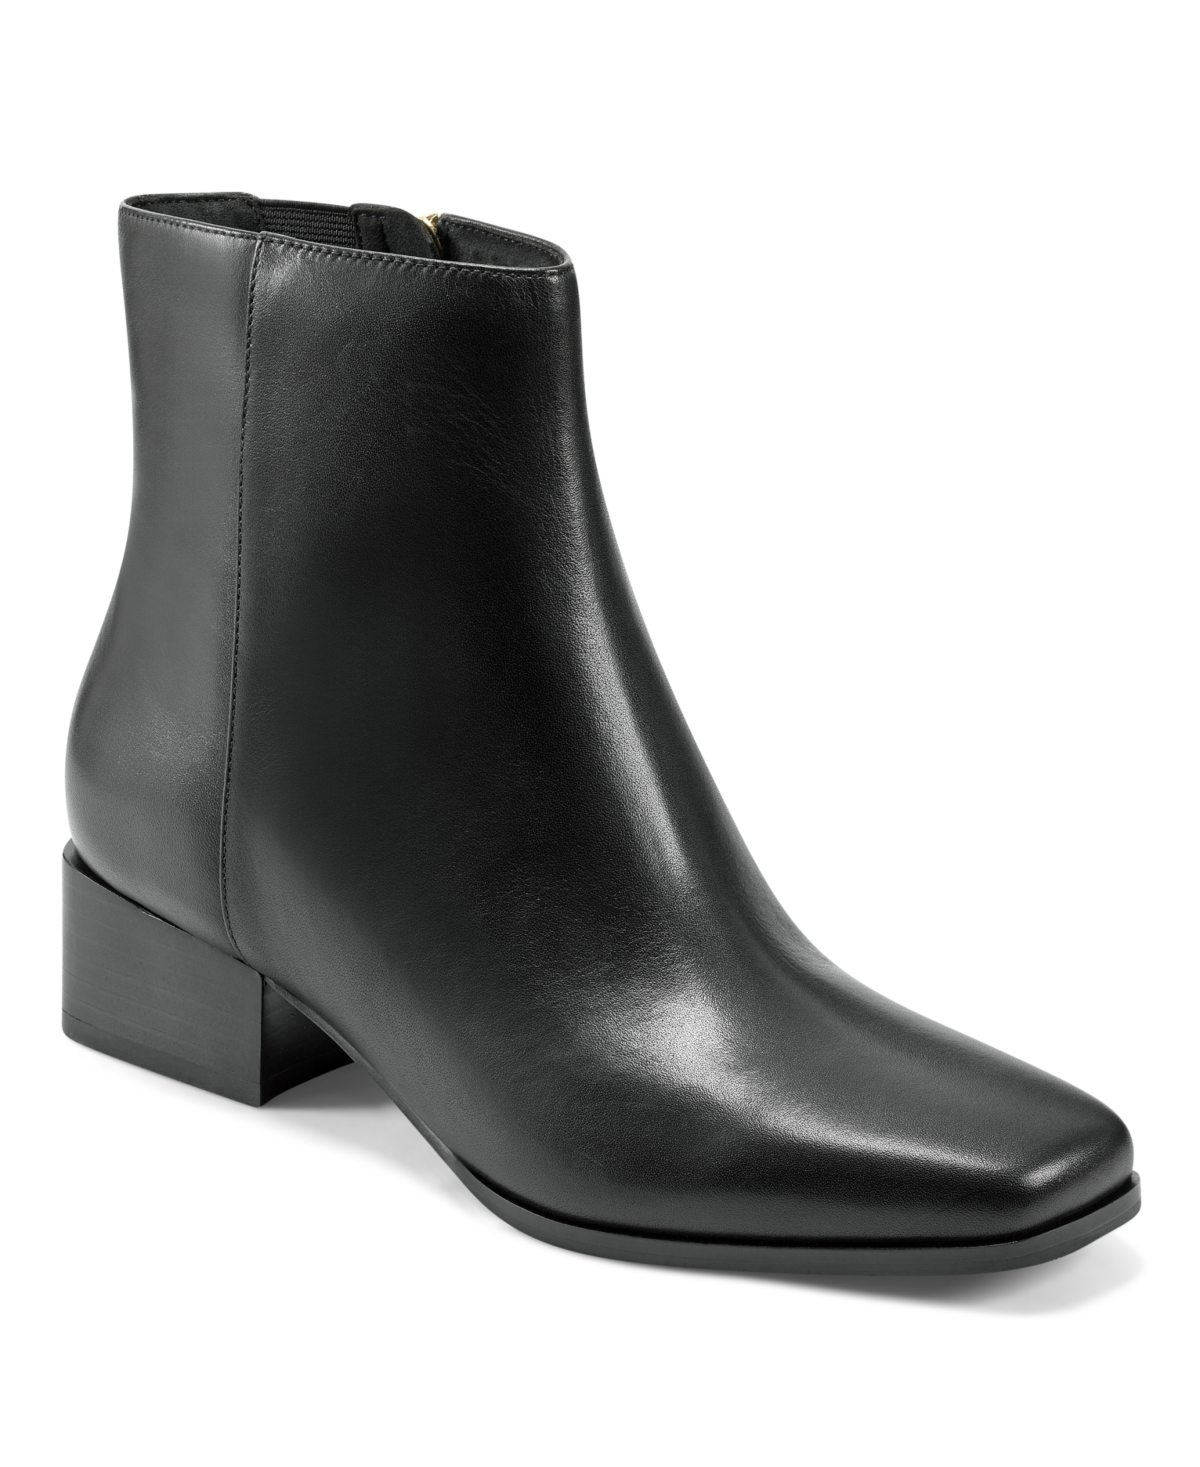 Women's Eflex Sidney Block Heel Square Toe Dress Booties - Black Leather